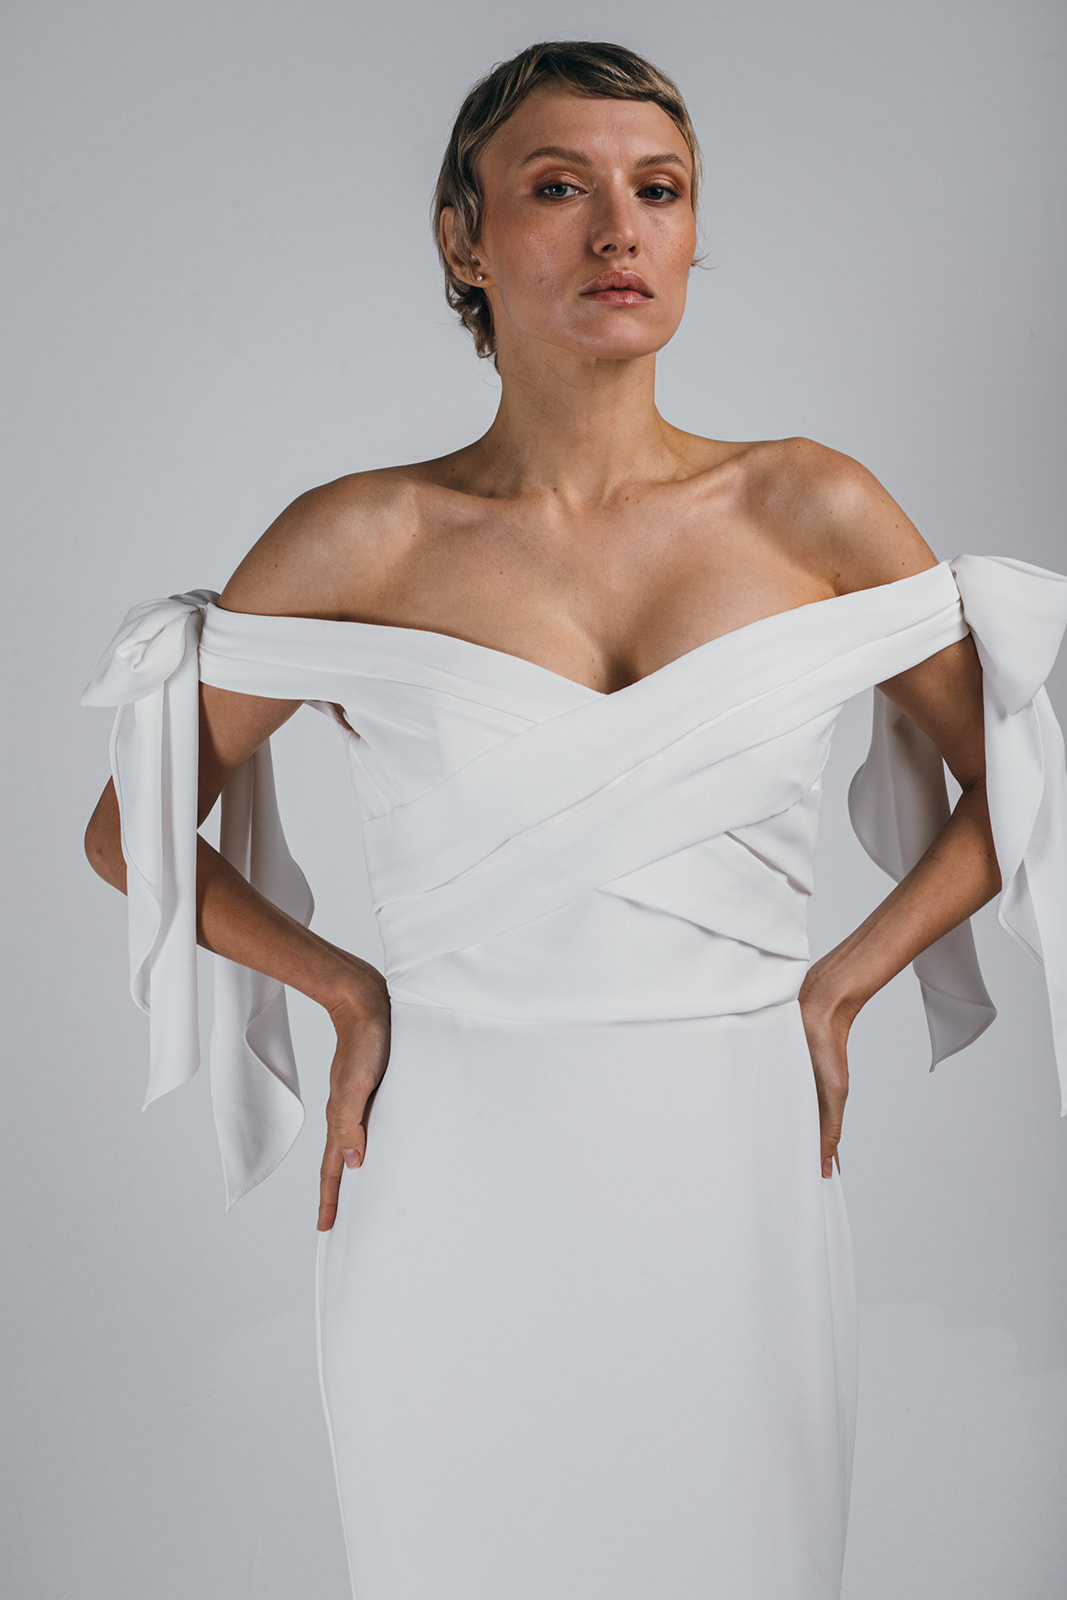 Pandore Collection 2022 - Robe de mariée - Blog Mariage Madame C